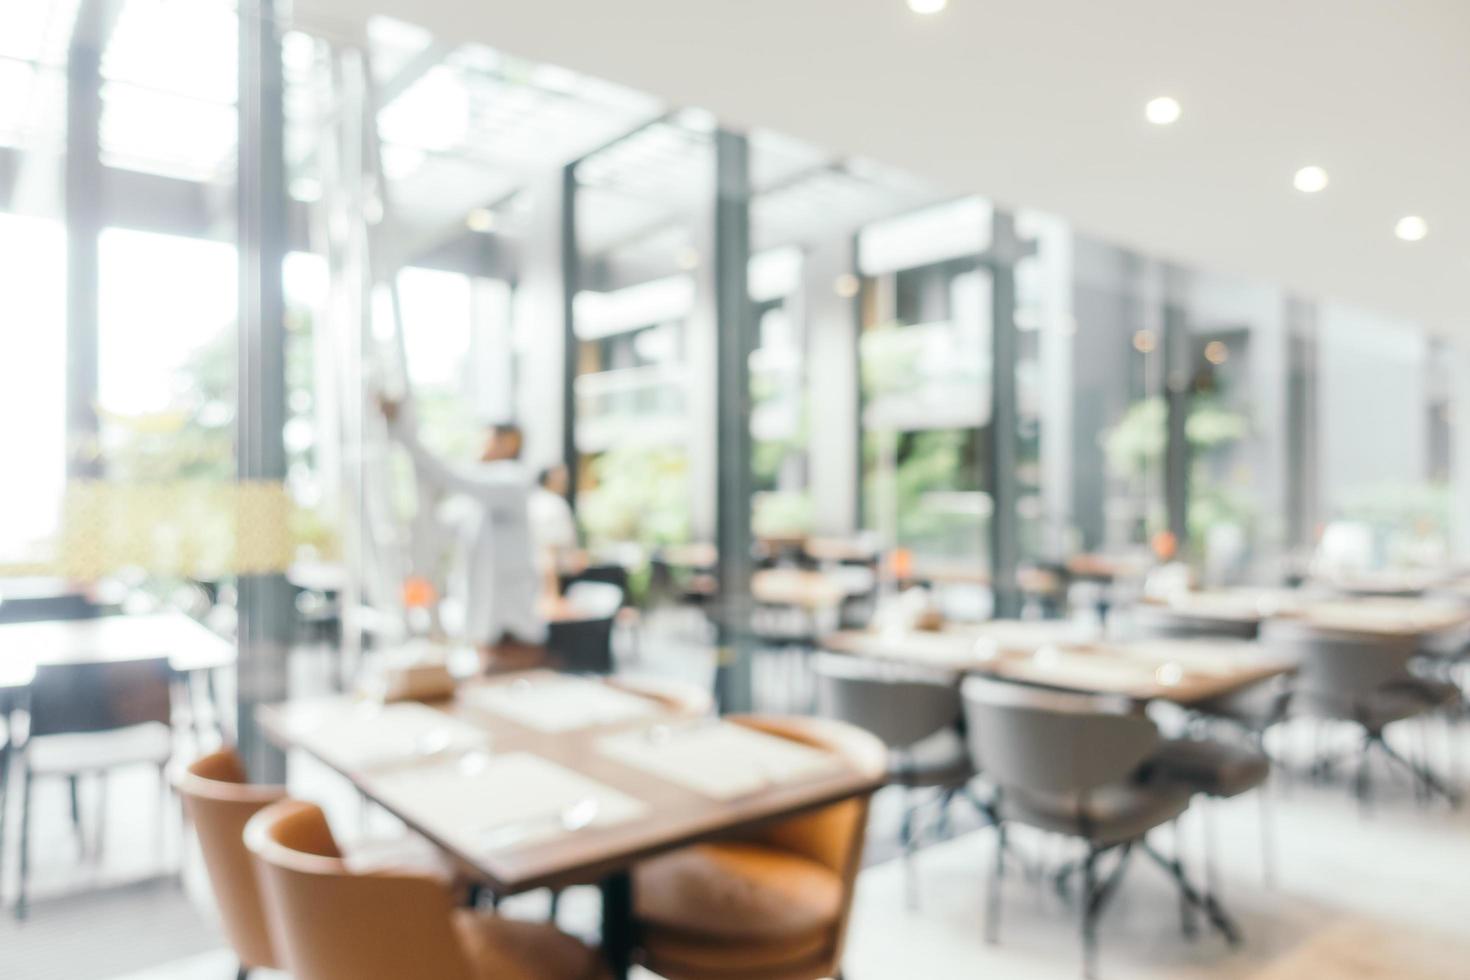 Abstract blur restaurant cafe interior photo